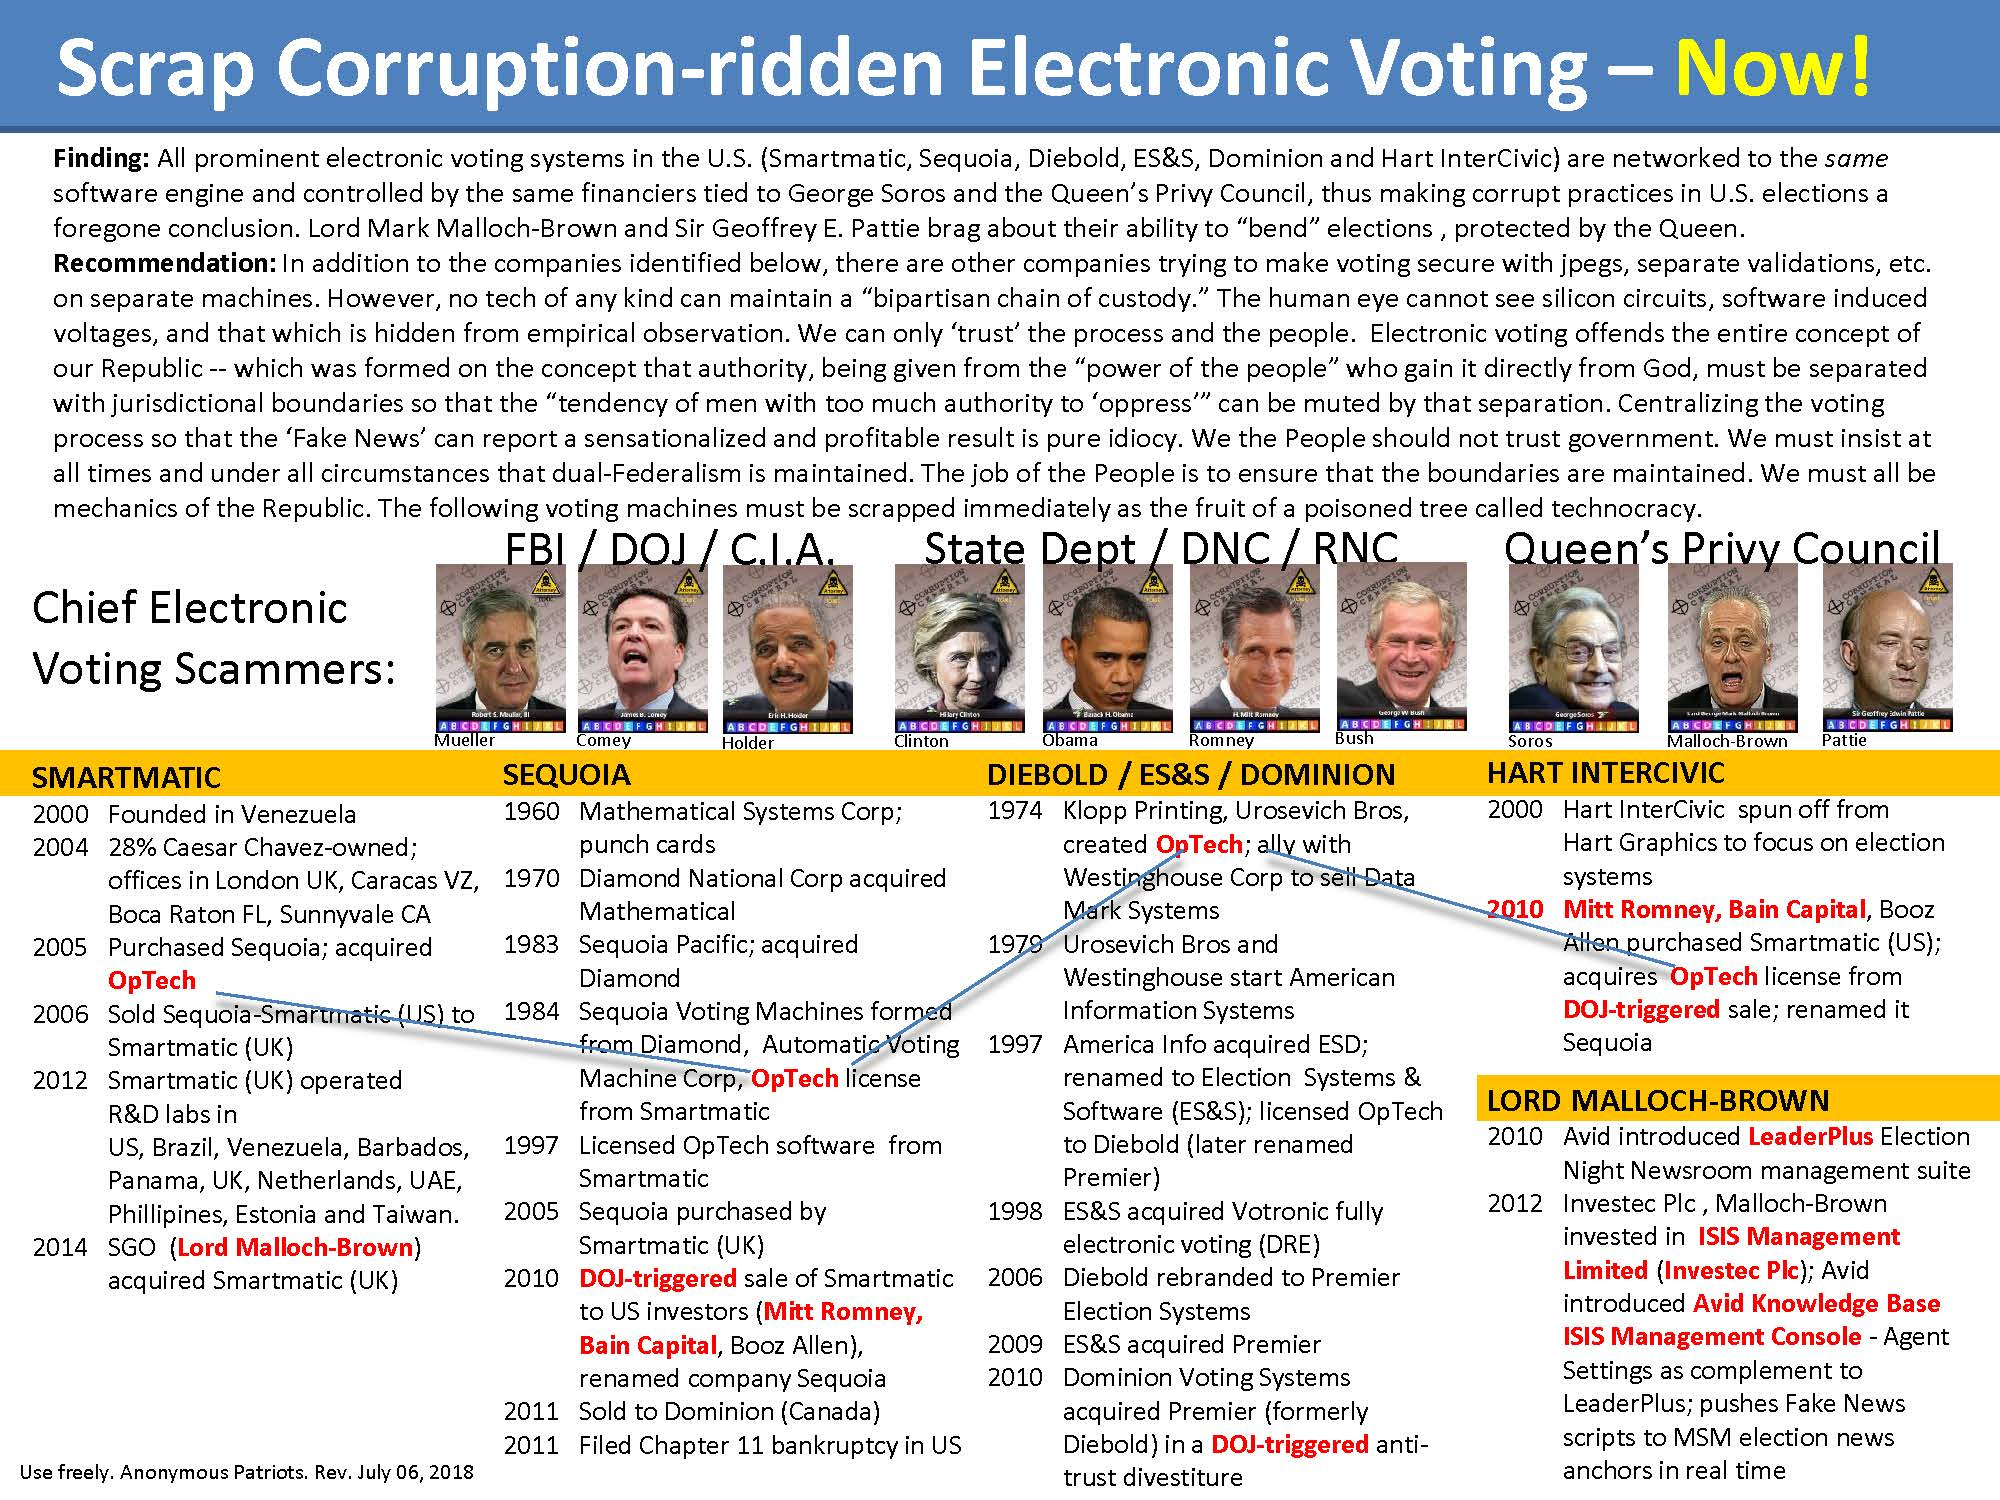 Scrap Electronic Voting Machines NOW!